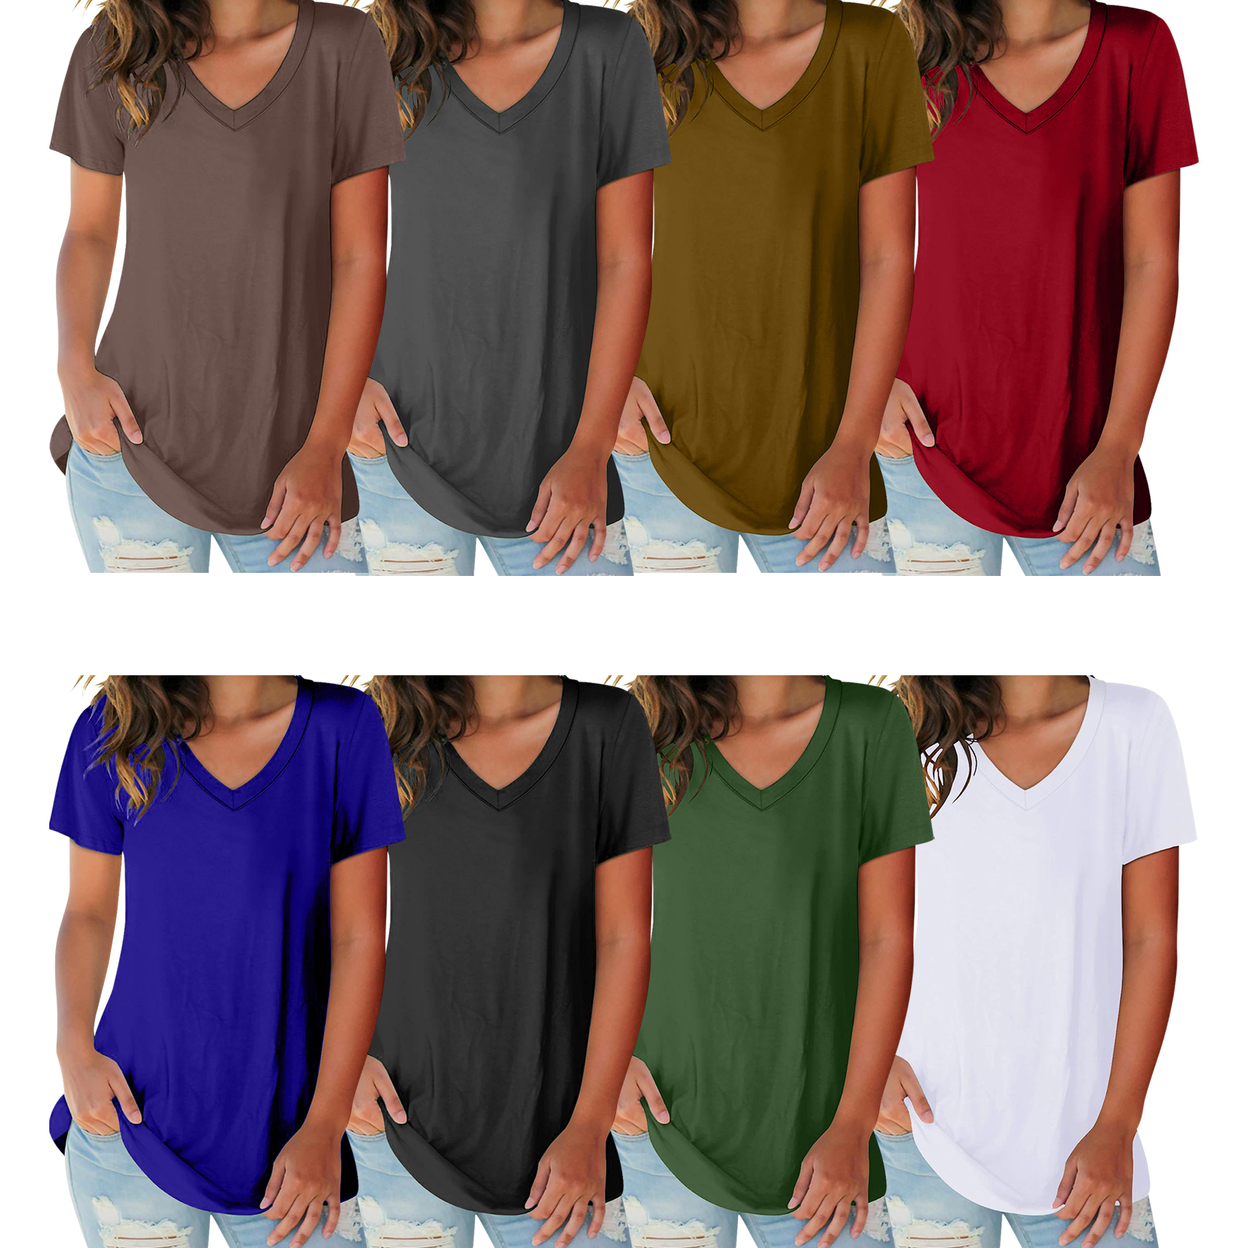 3-Pack: Women's Ultra Soft Smooth Cotton Blend Basic V-Neck Short Sleeve Shirts - Black, White Mustard, X-large